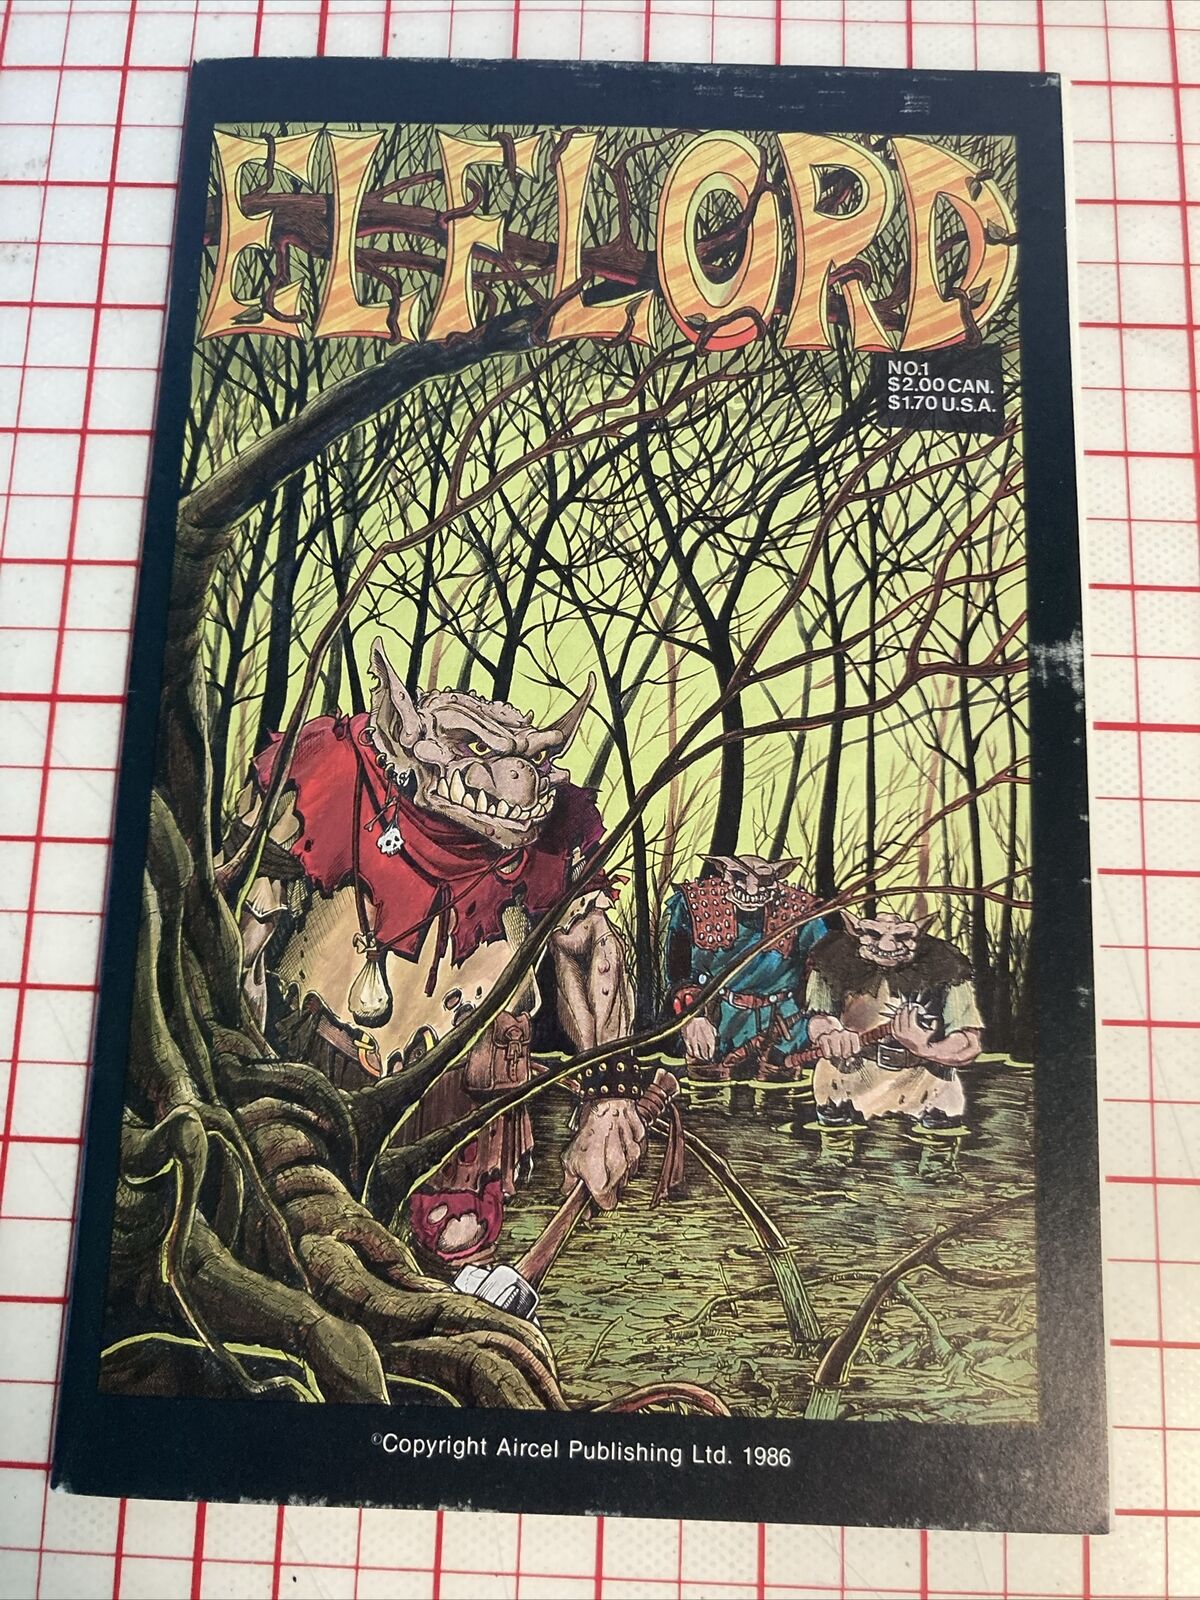 Elflord #1 - Canadian Comic - Aircel Comics - 1st Printing FN